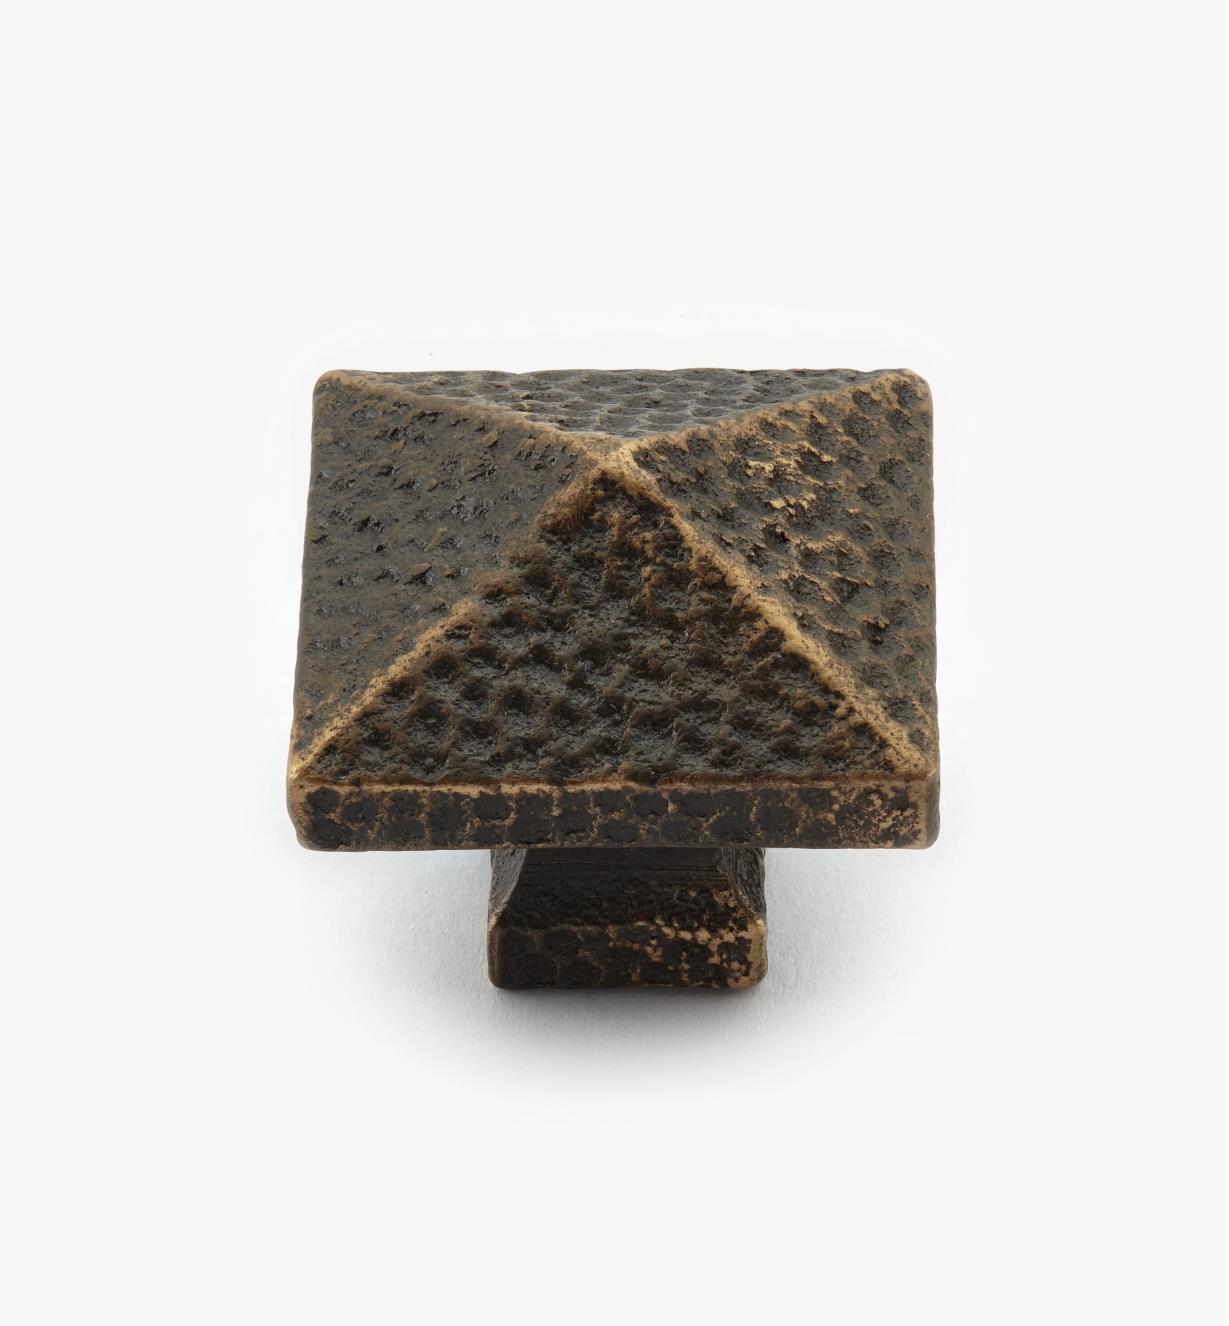 02G0220 - 1 1/4" x 1 1/8" Antique Bronze Sq. Knob